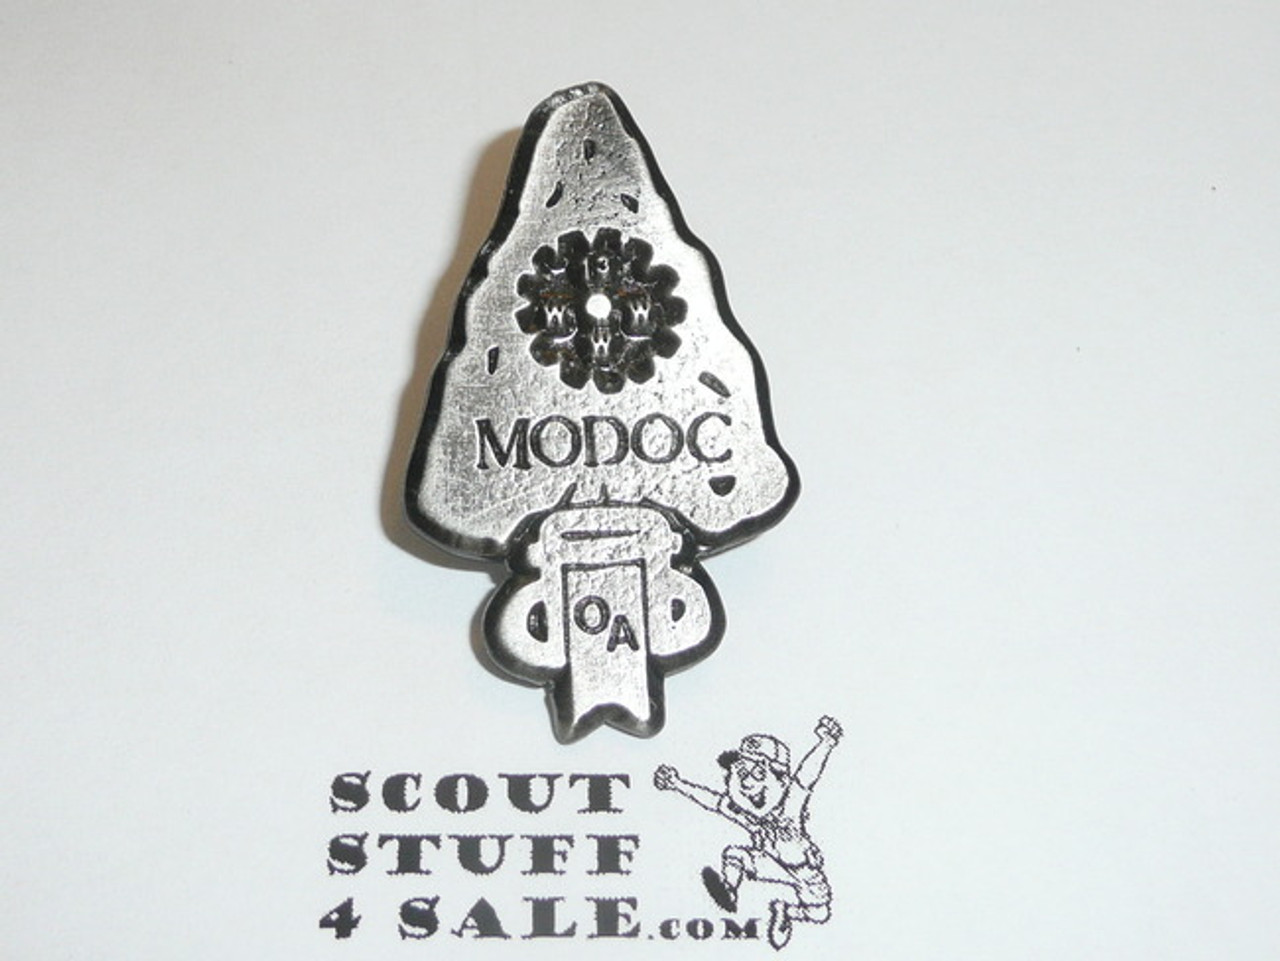 Wiatava O.A. Lodge #13 Modoc Chapter Arrowhead Pin